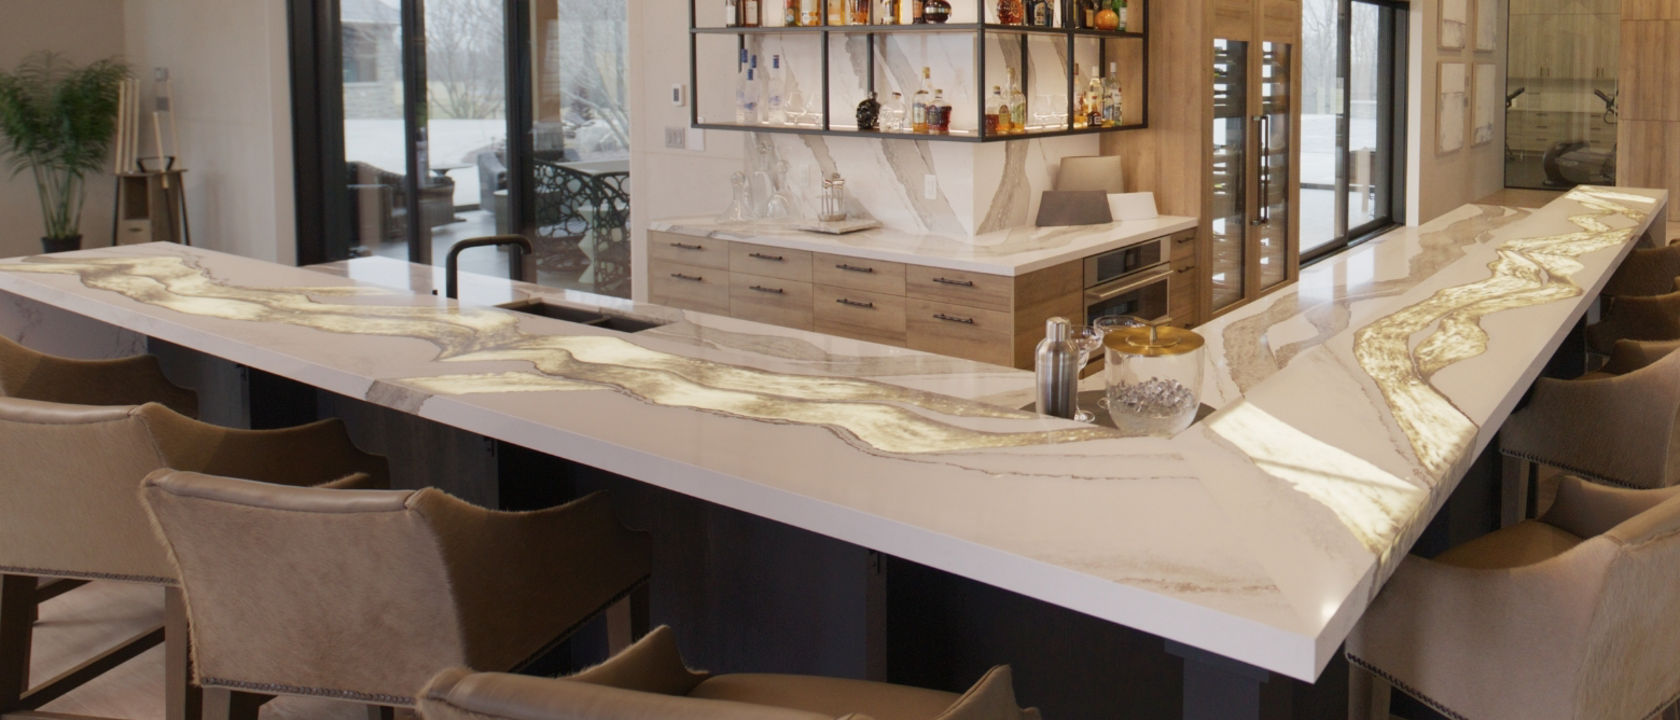 Cambria Skara Brae quartz bar countertop and backsplash